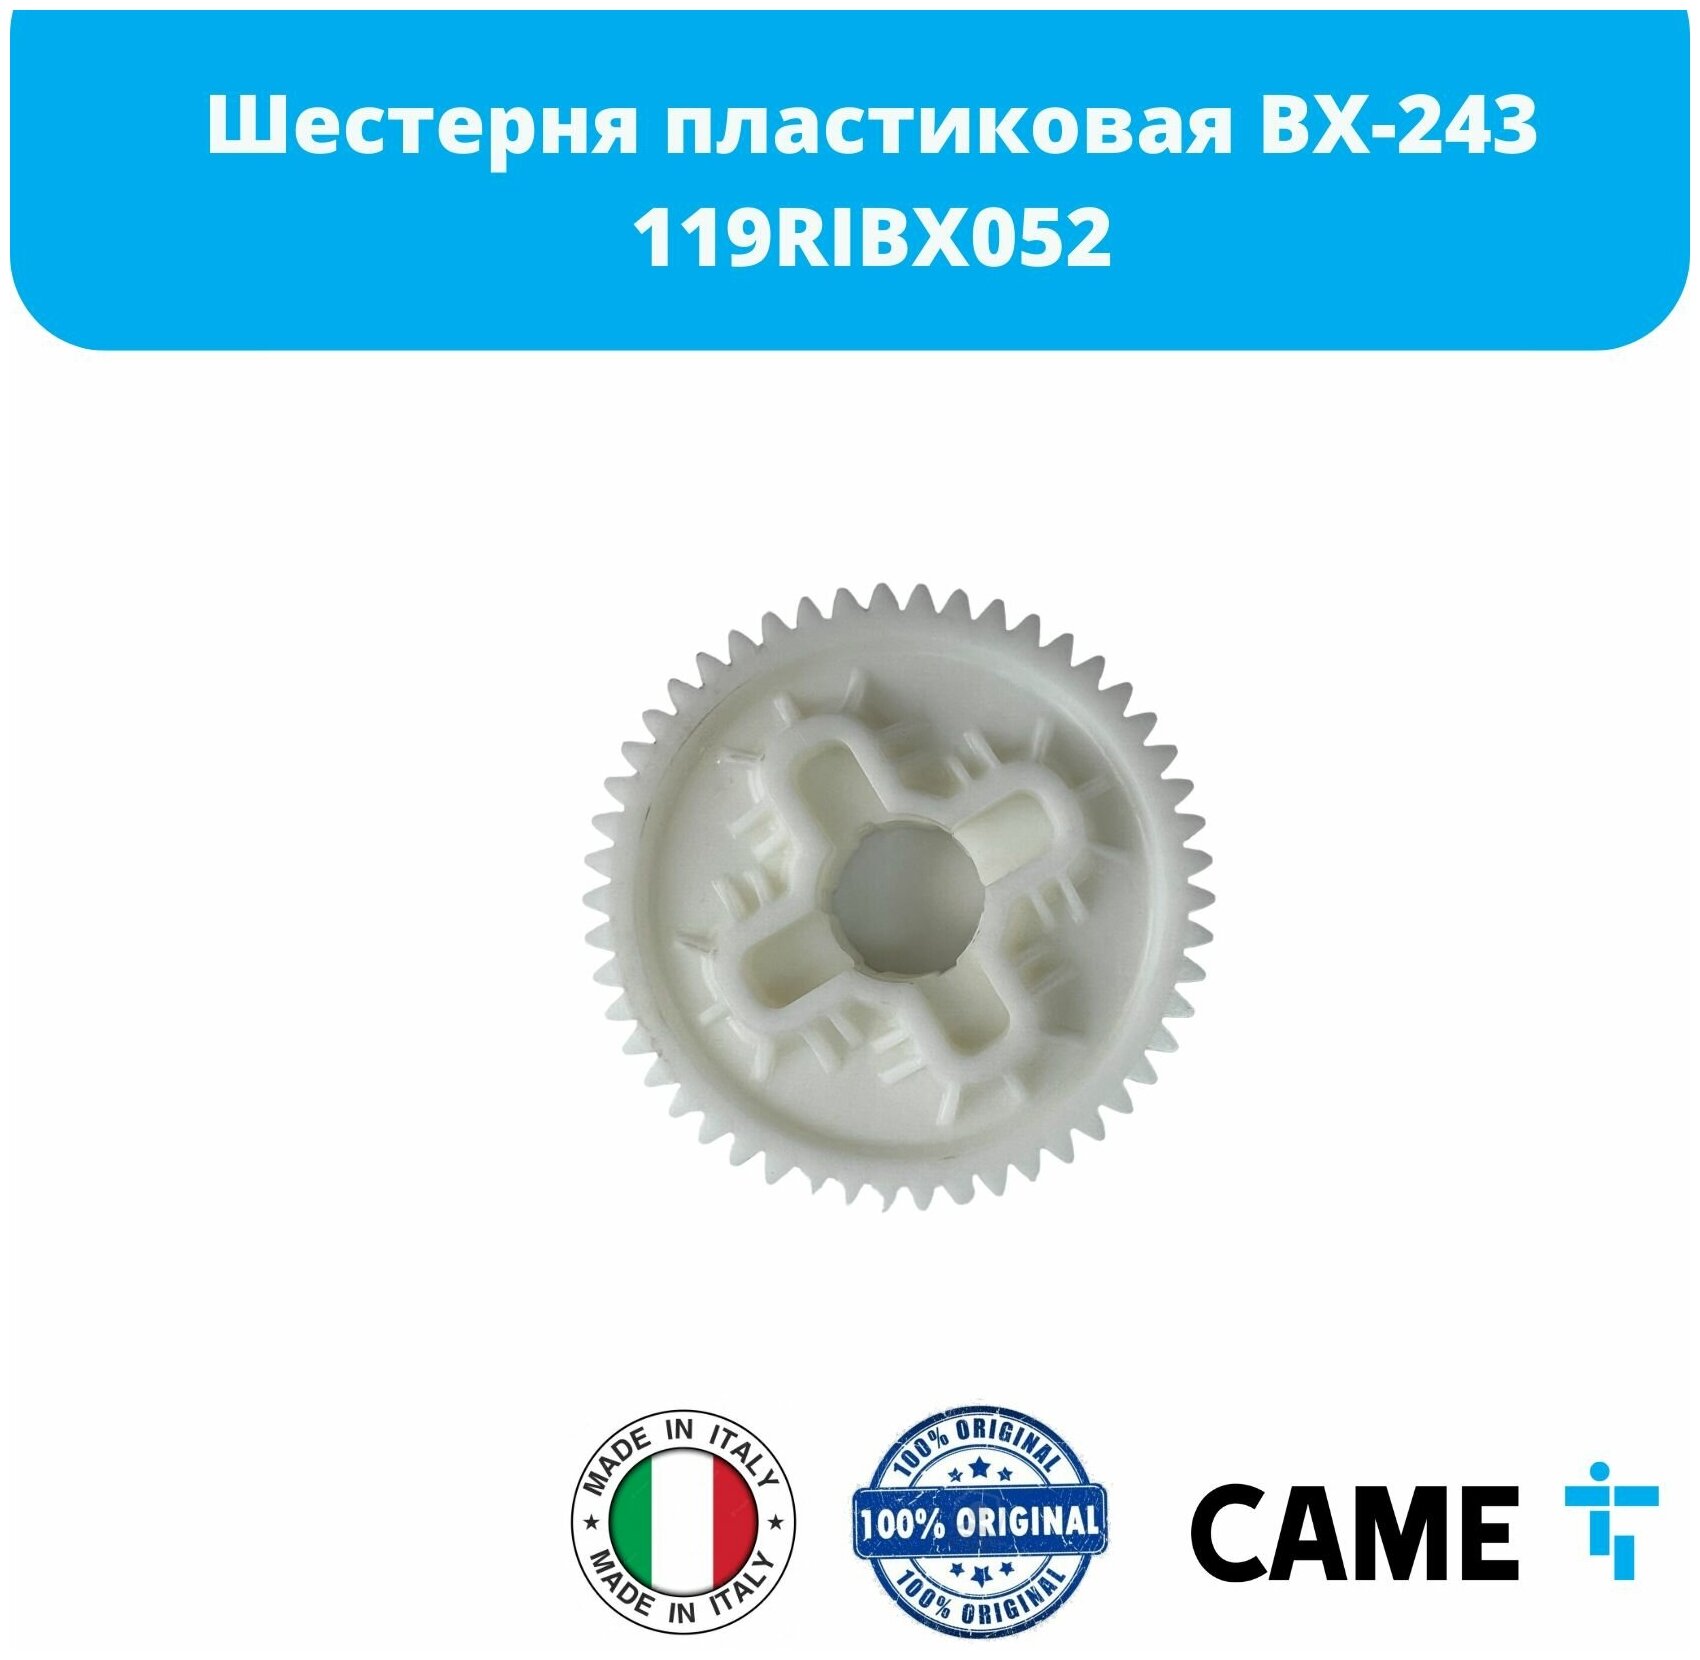 CAME 119RIBX052 Шестерня пластиковая BX-243